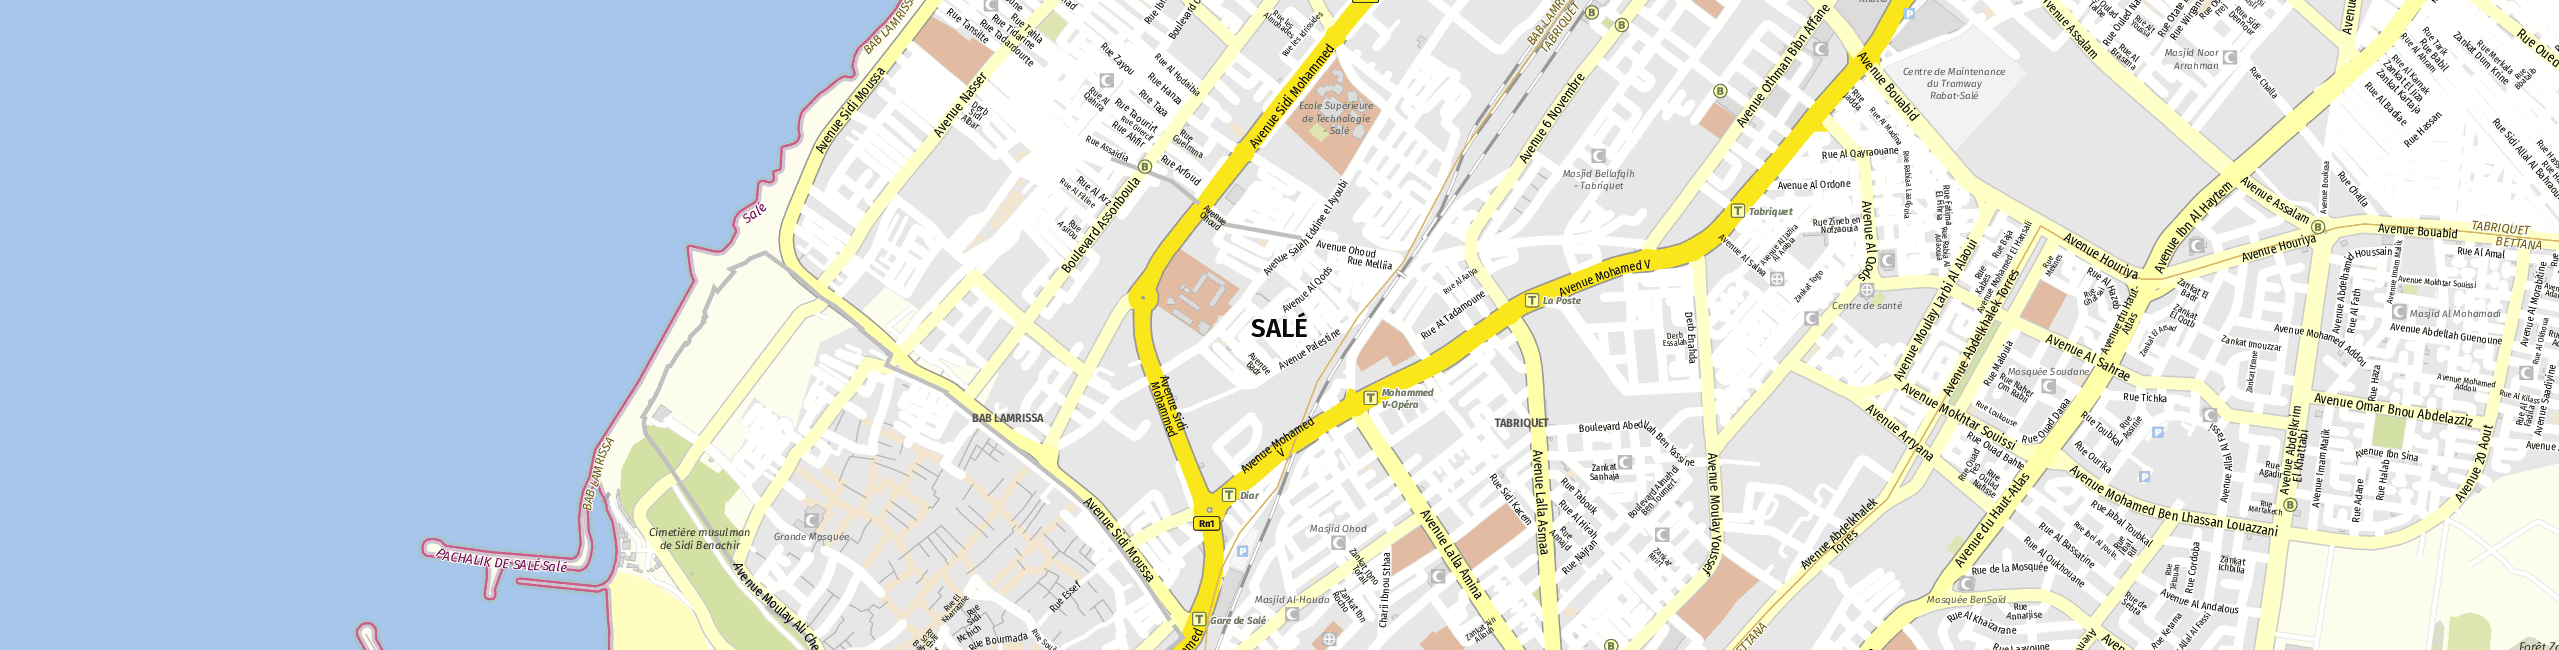 Stadtplan Salé zum Downloaden.